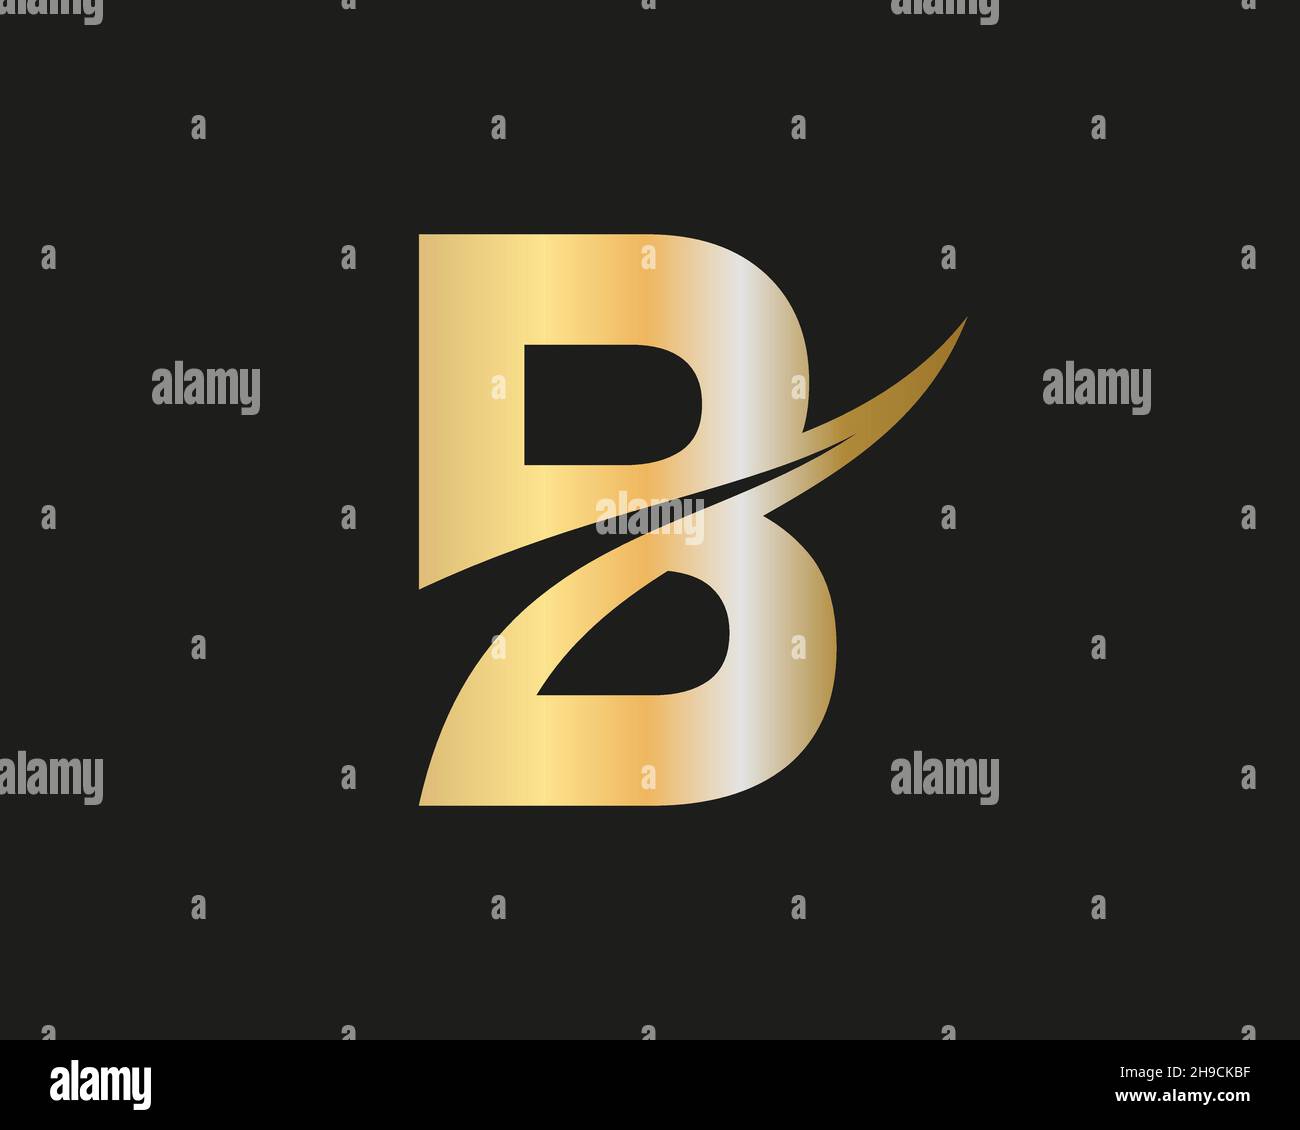 B Logo Design Template. Initial B Letter Logo With Creative Modern ...